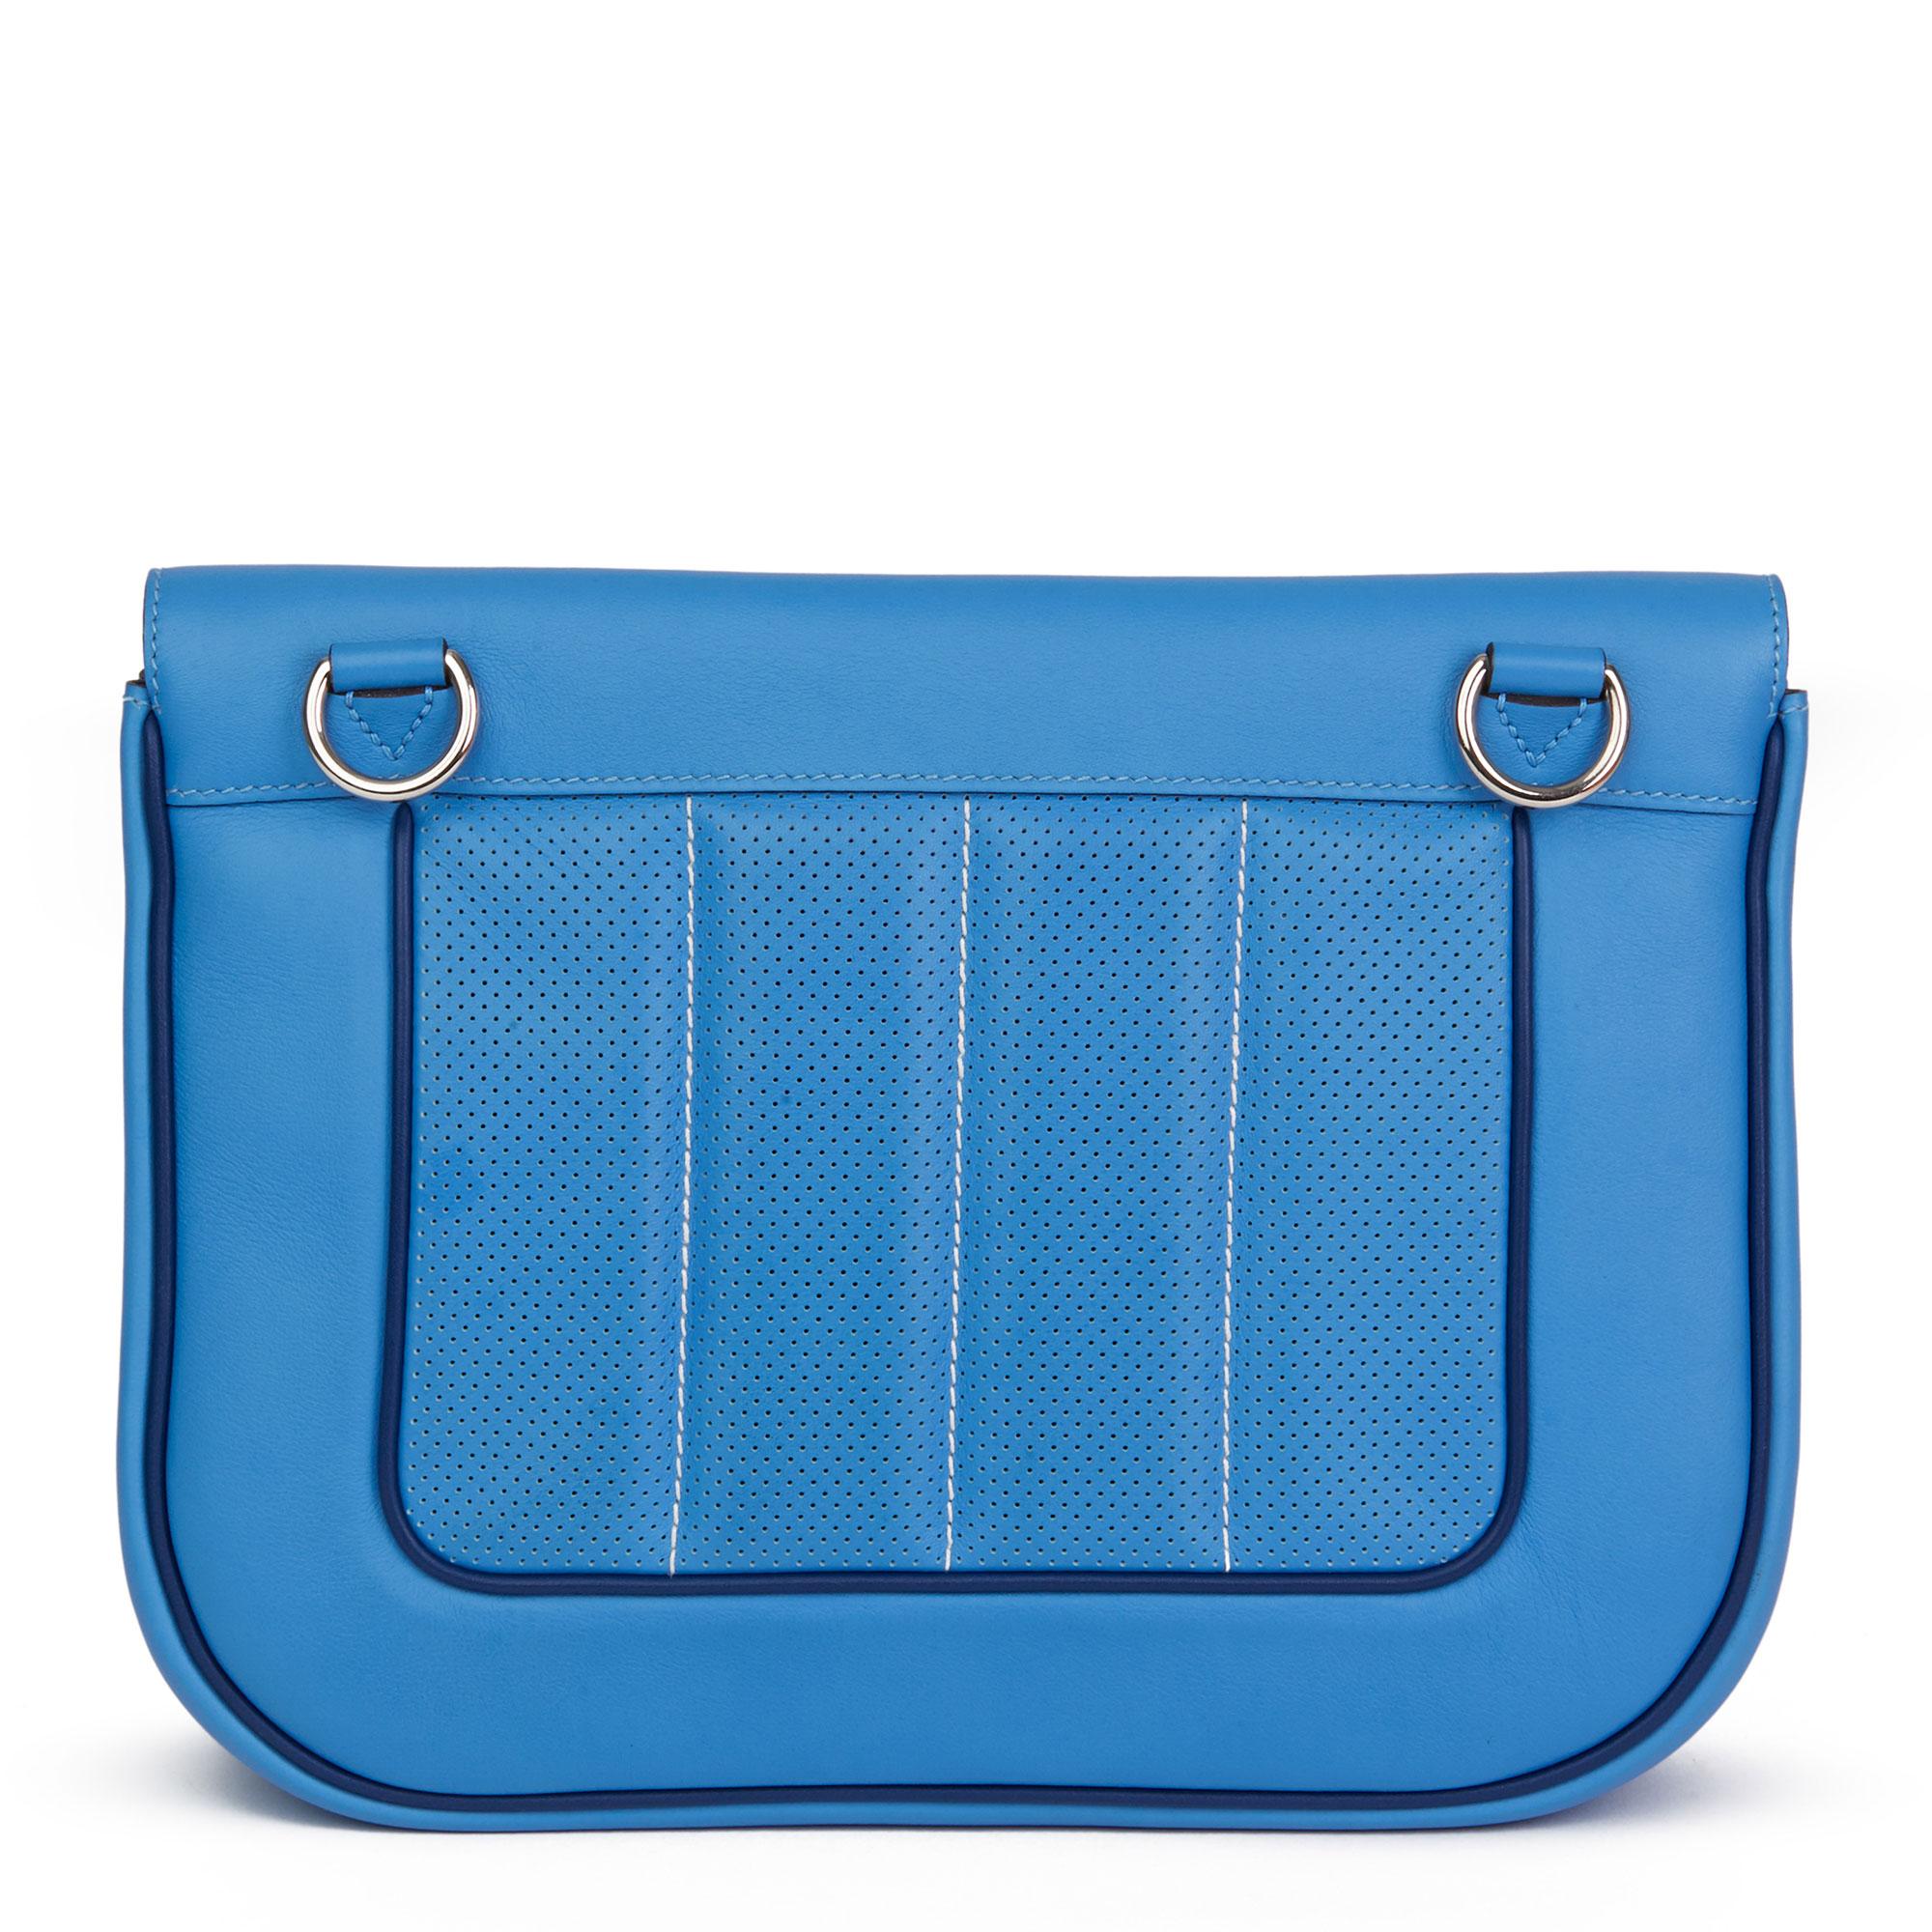 2014 Hermès Blue Paradis & Blue Saphir Perforated Swift Leather Berlin 28cm  1